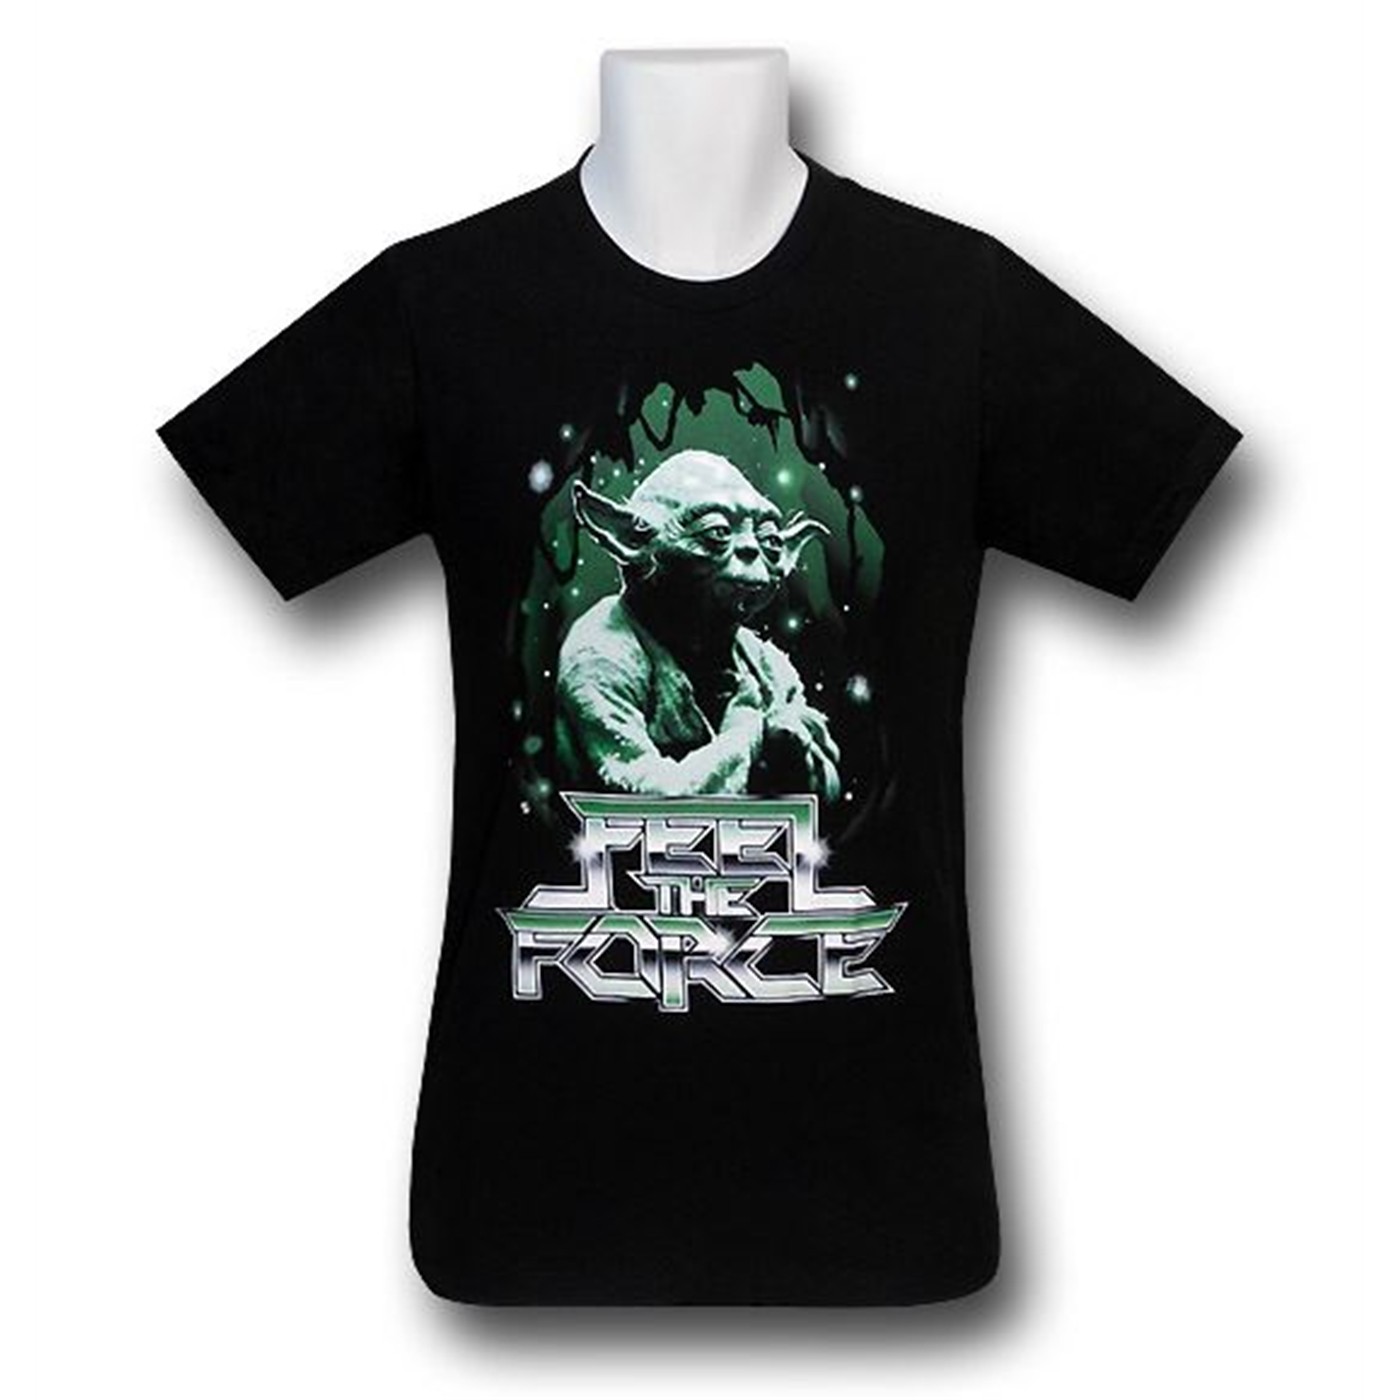 Yoda: "Feel The Force" 30 Single T-Shirt